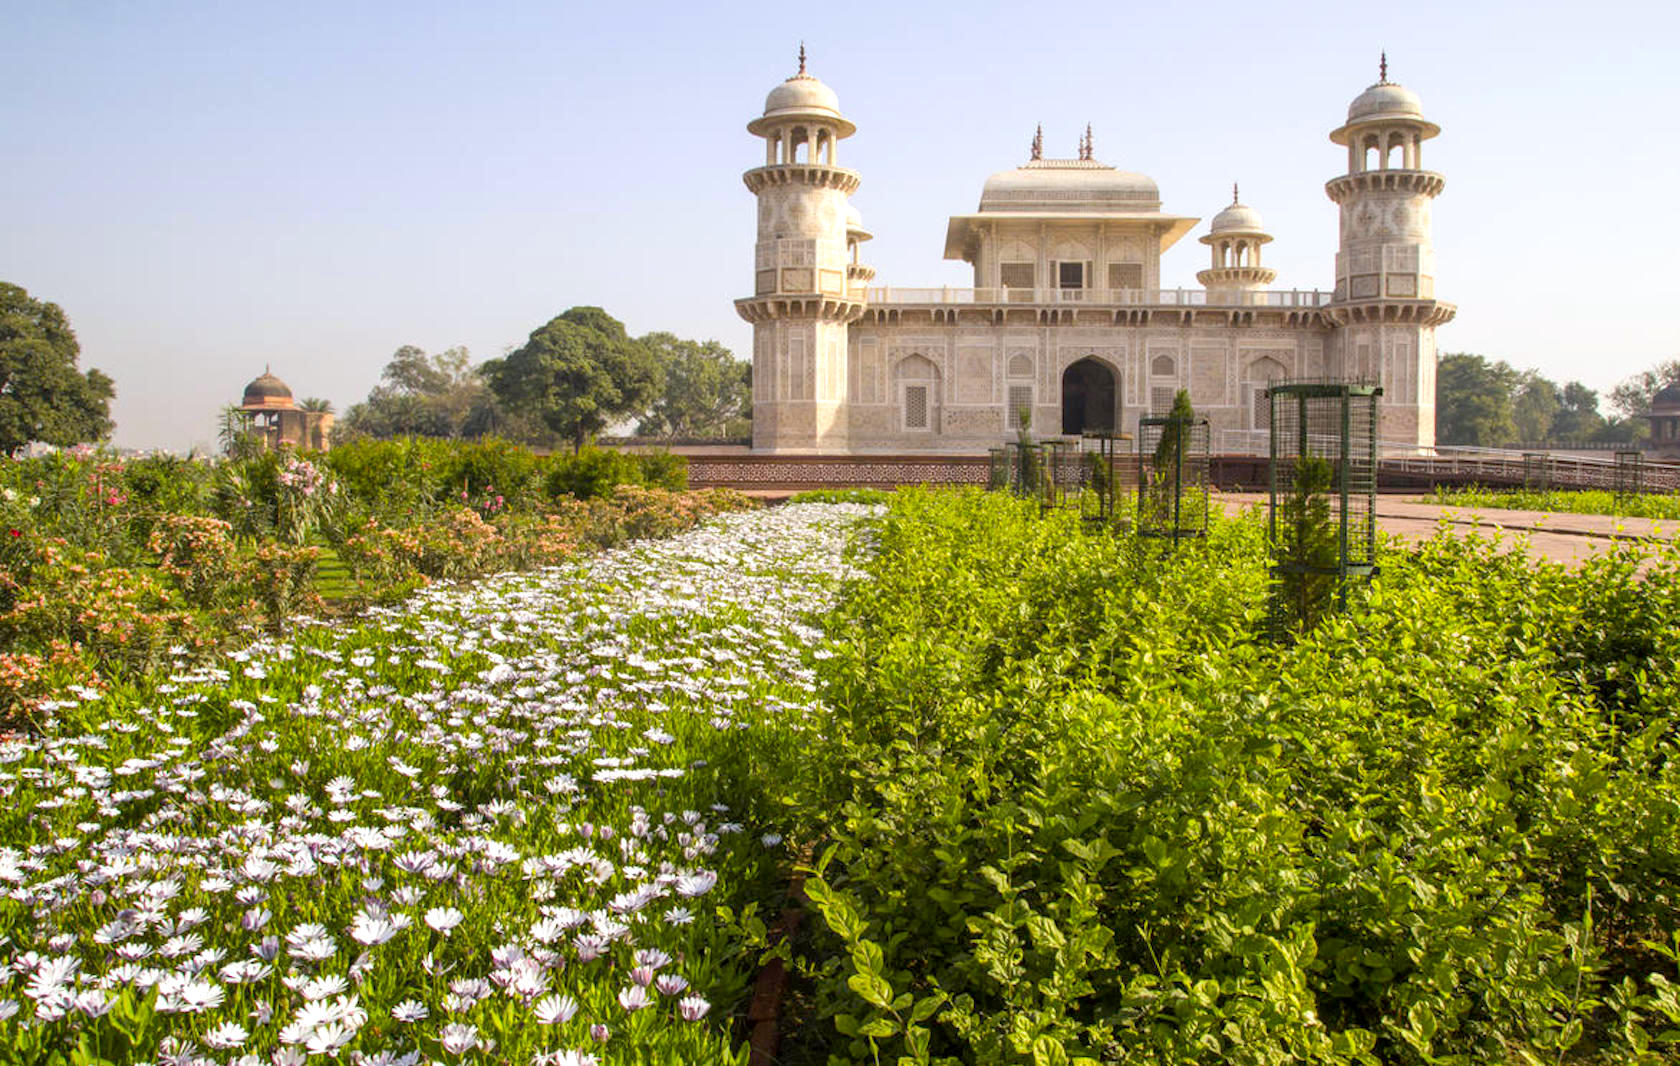 Royal gardens in India